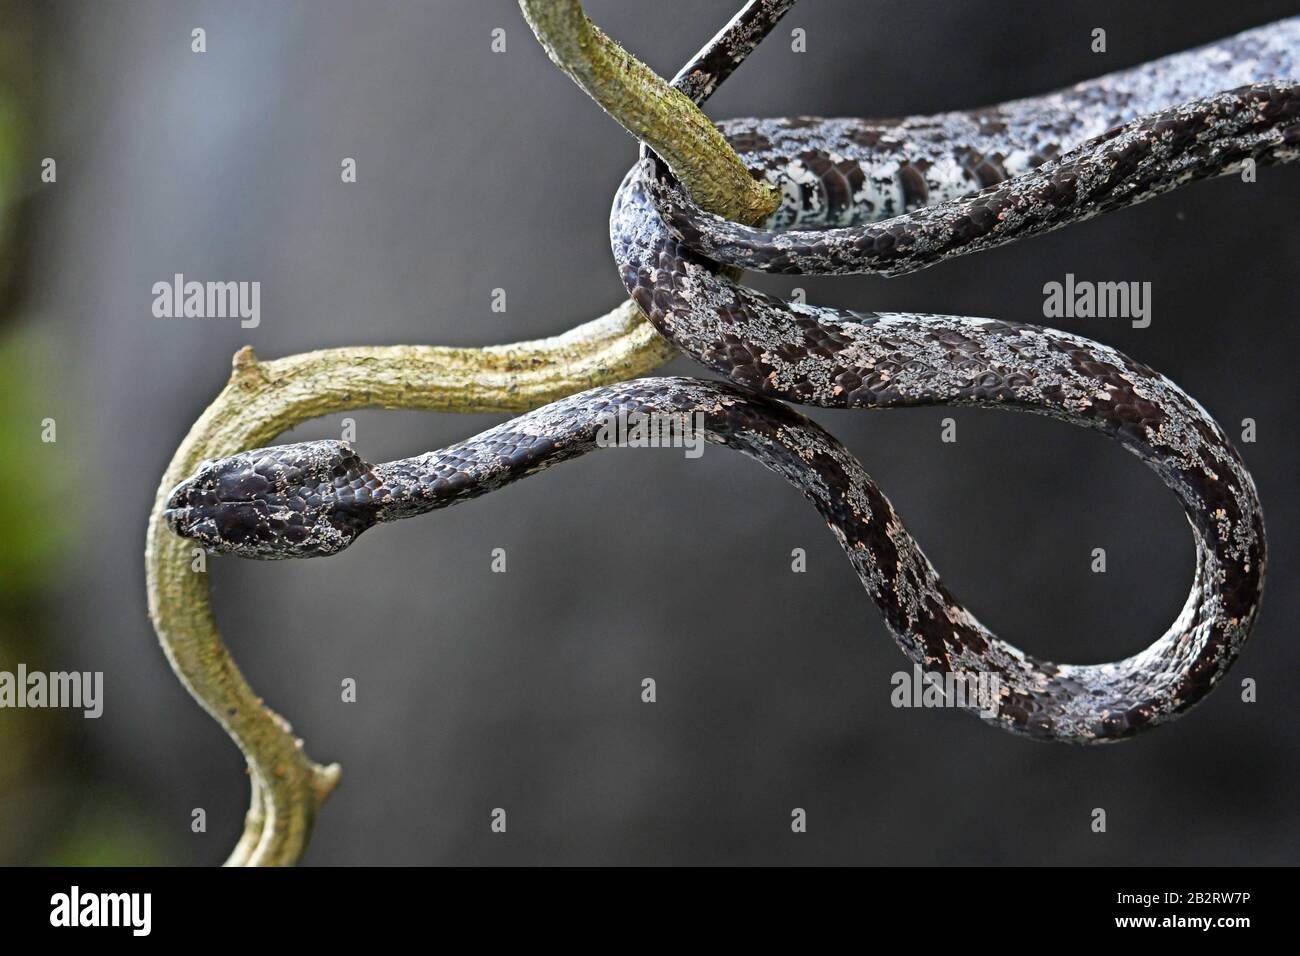 Slender tree snake climbs on a vine Stock Photo